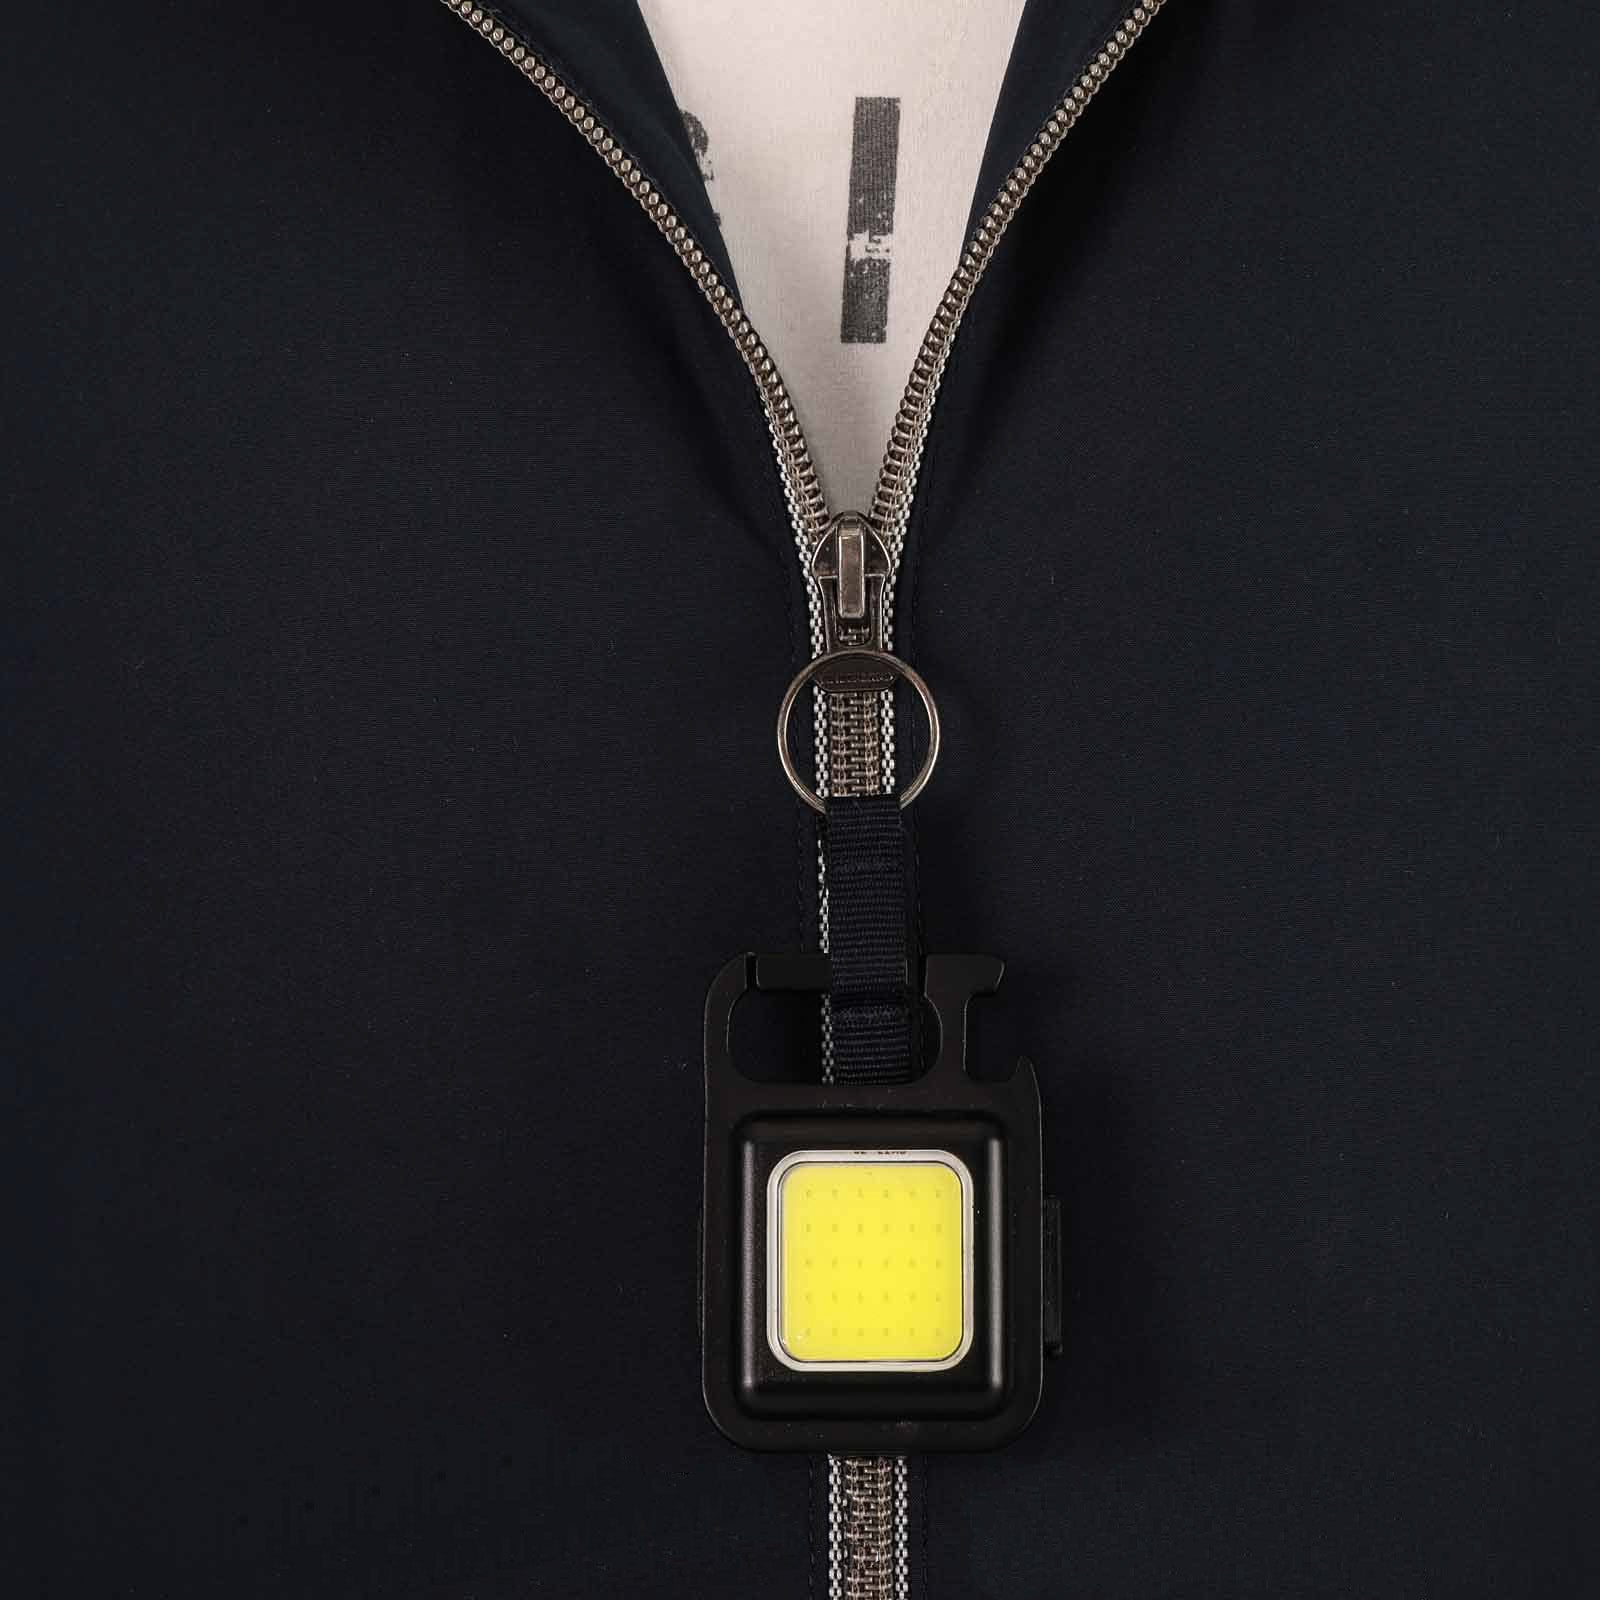 Portable Multi-Purpose Mini LED Flashlight attached to the sweatshirt